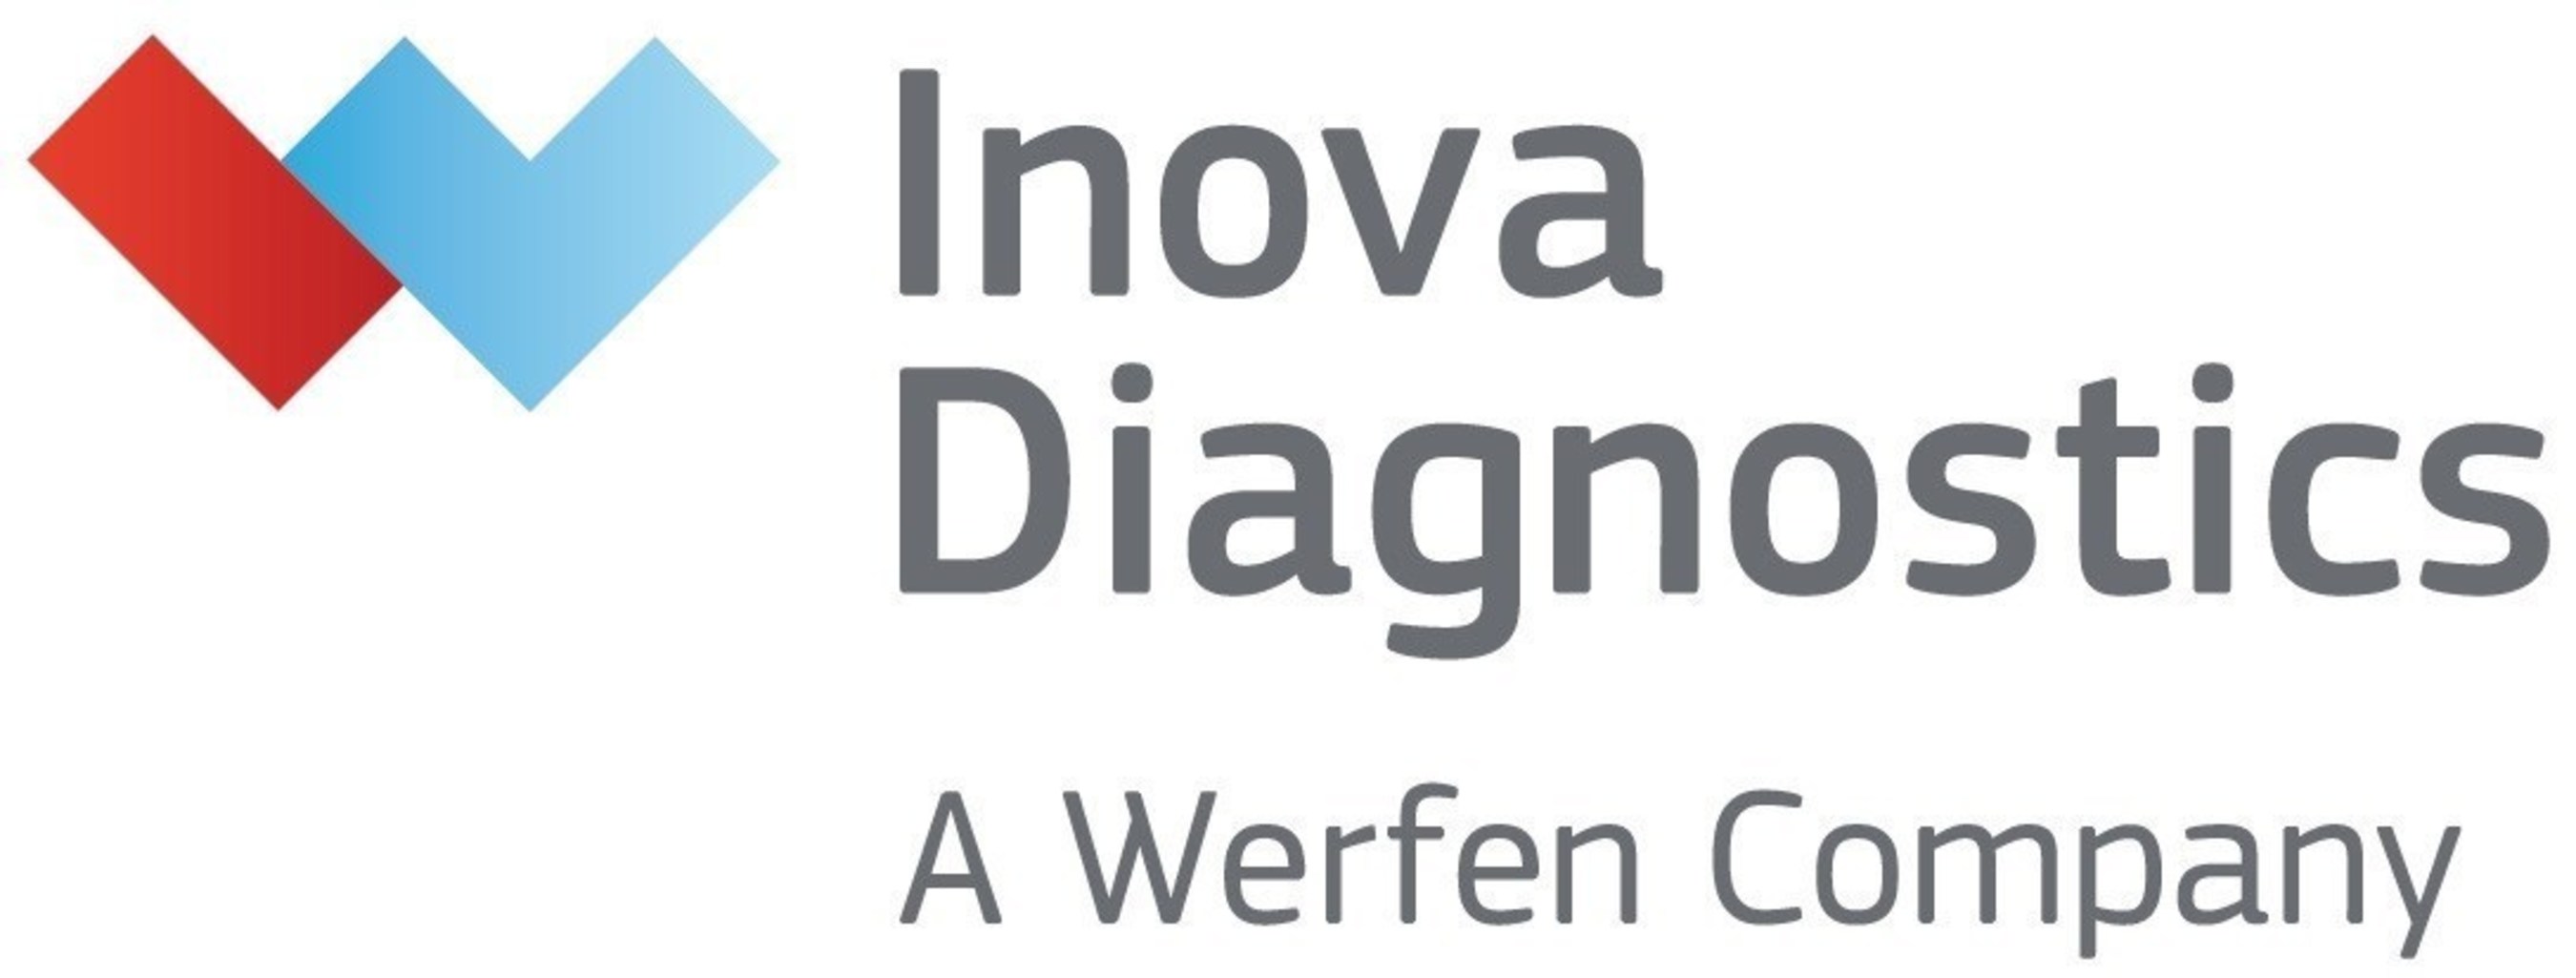 Inova Diagnostics logo